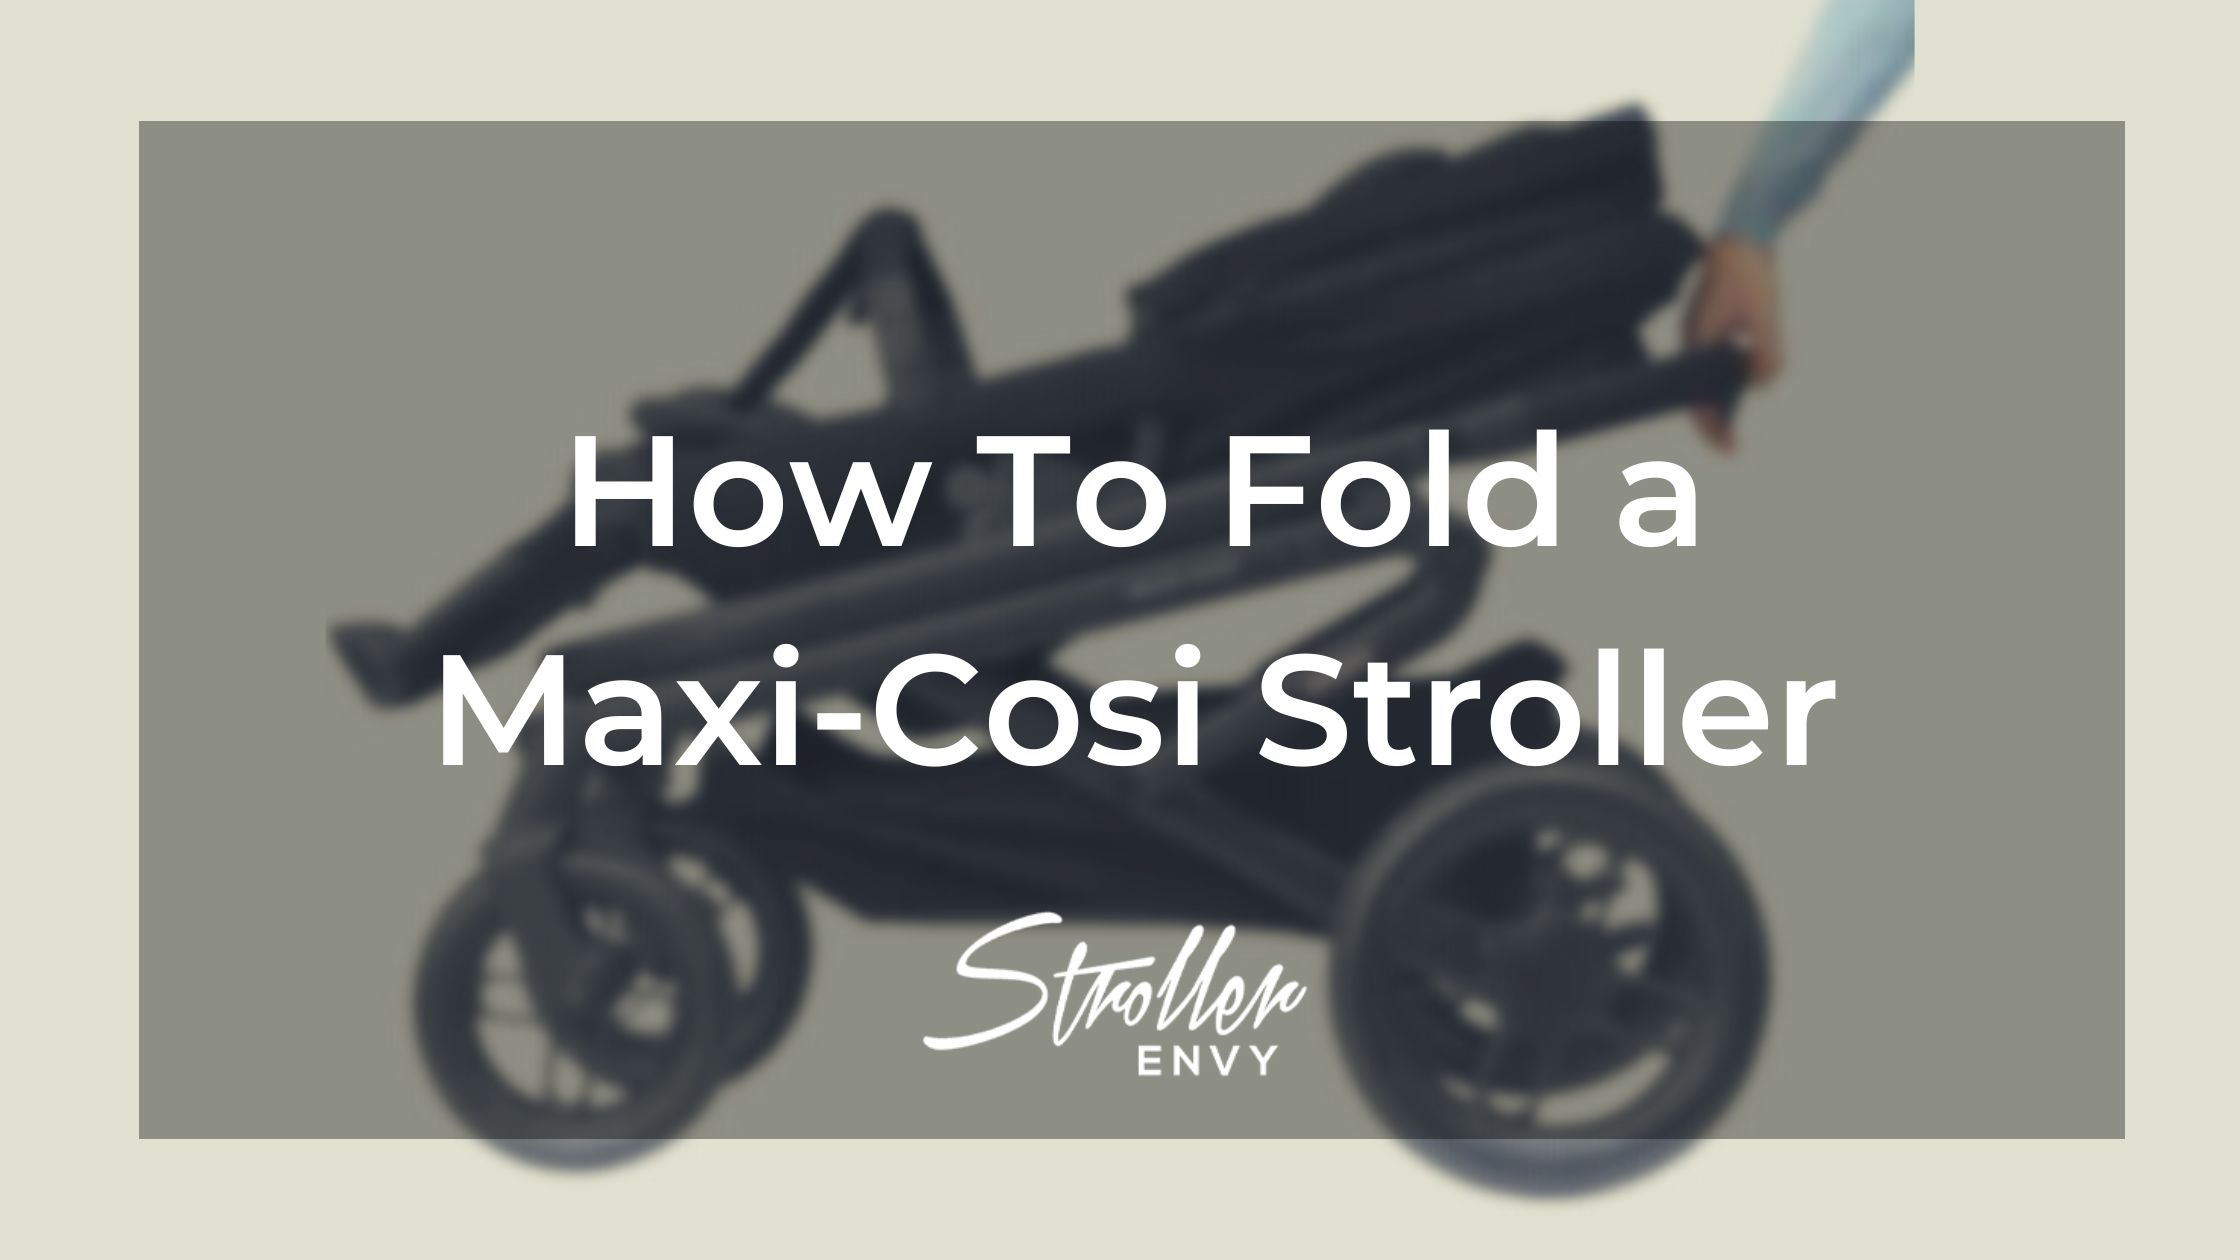 How To Fold a Maxi-Cosi Stroller